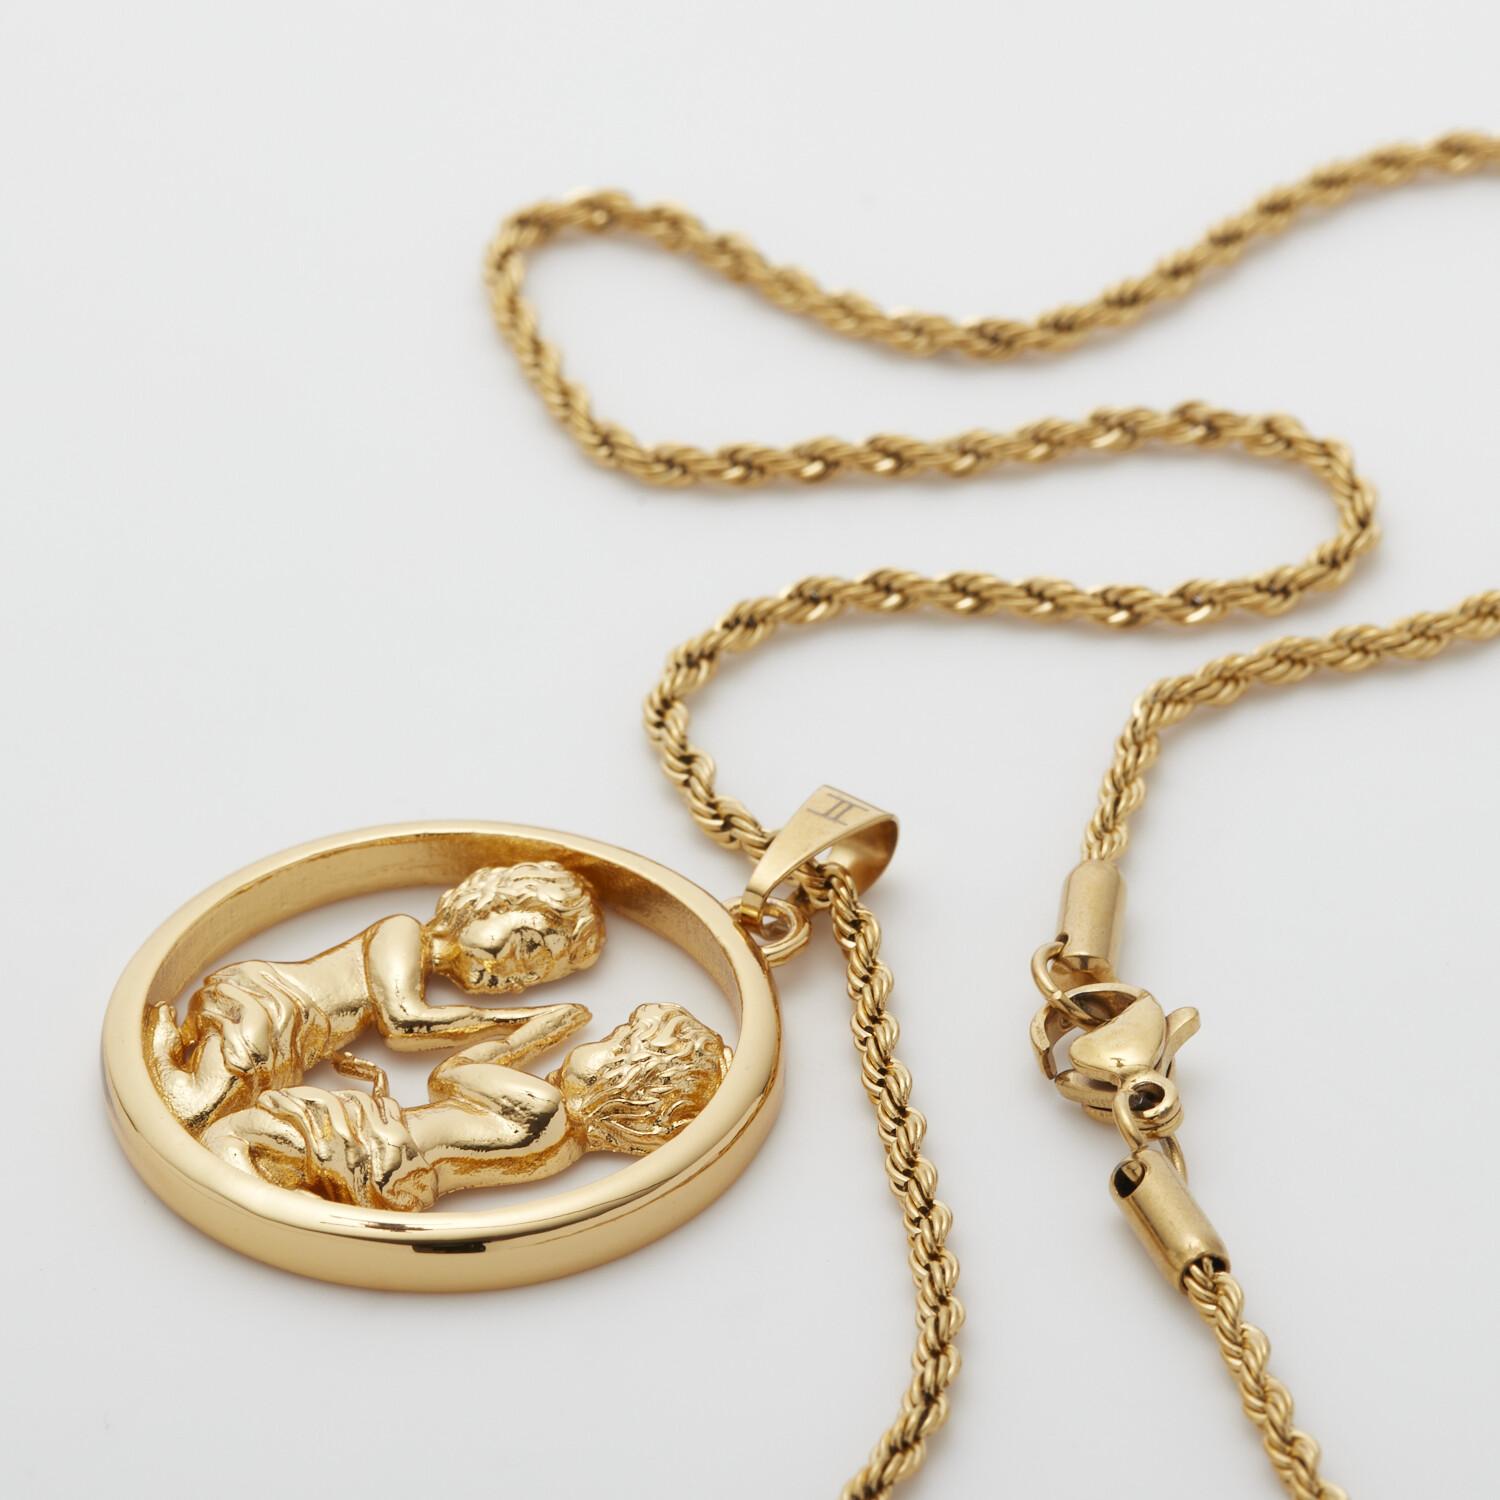 gemini medallion necklace